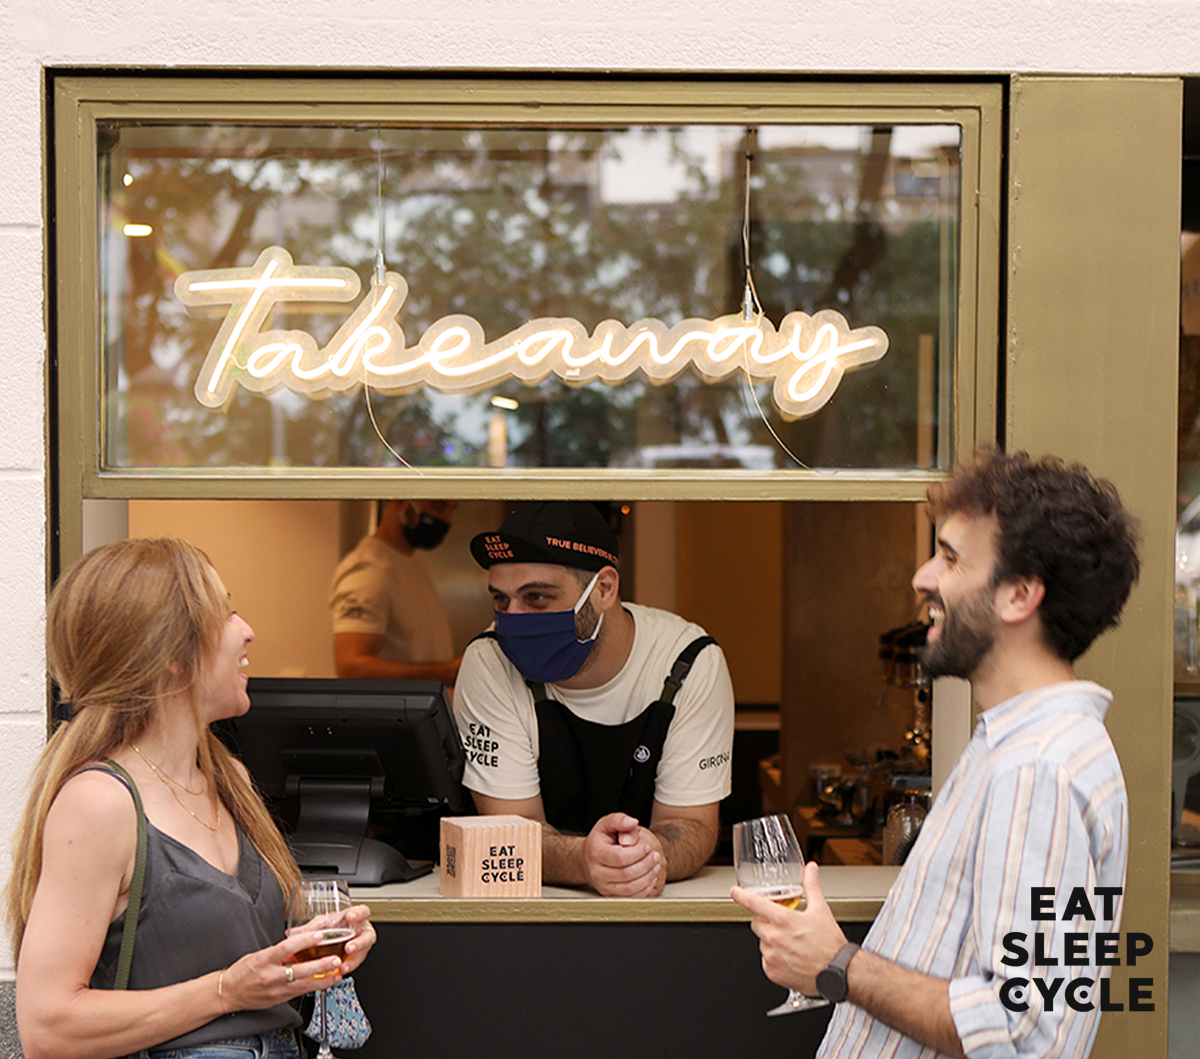 Eat-Sleep-Cycle-Hub-Cafe-Cycling-Cafe-Girona